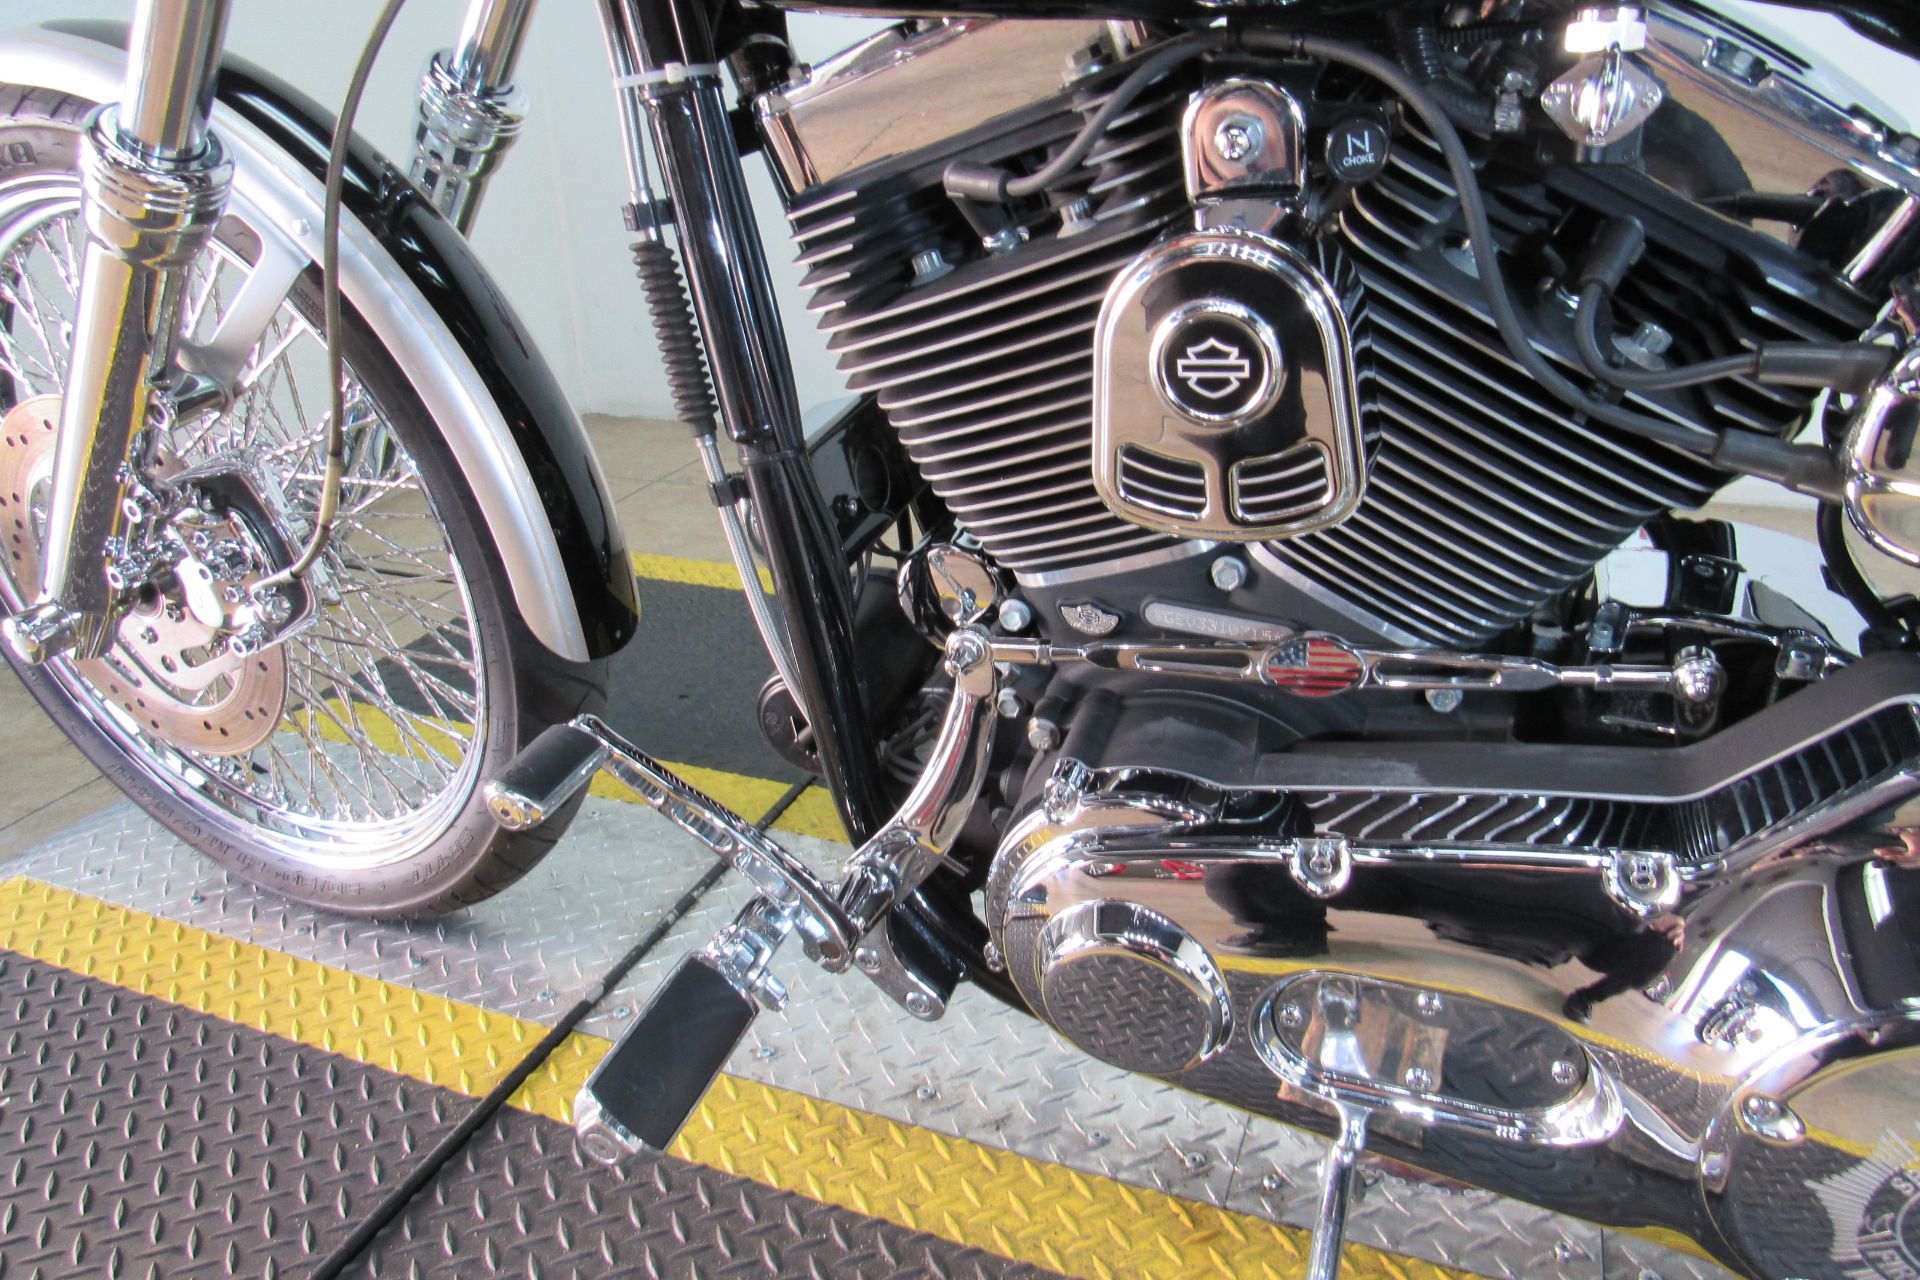 2003 Harley-Davidson FXDWG Dyna Wide Glide® in Temecula, California - Photo 18